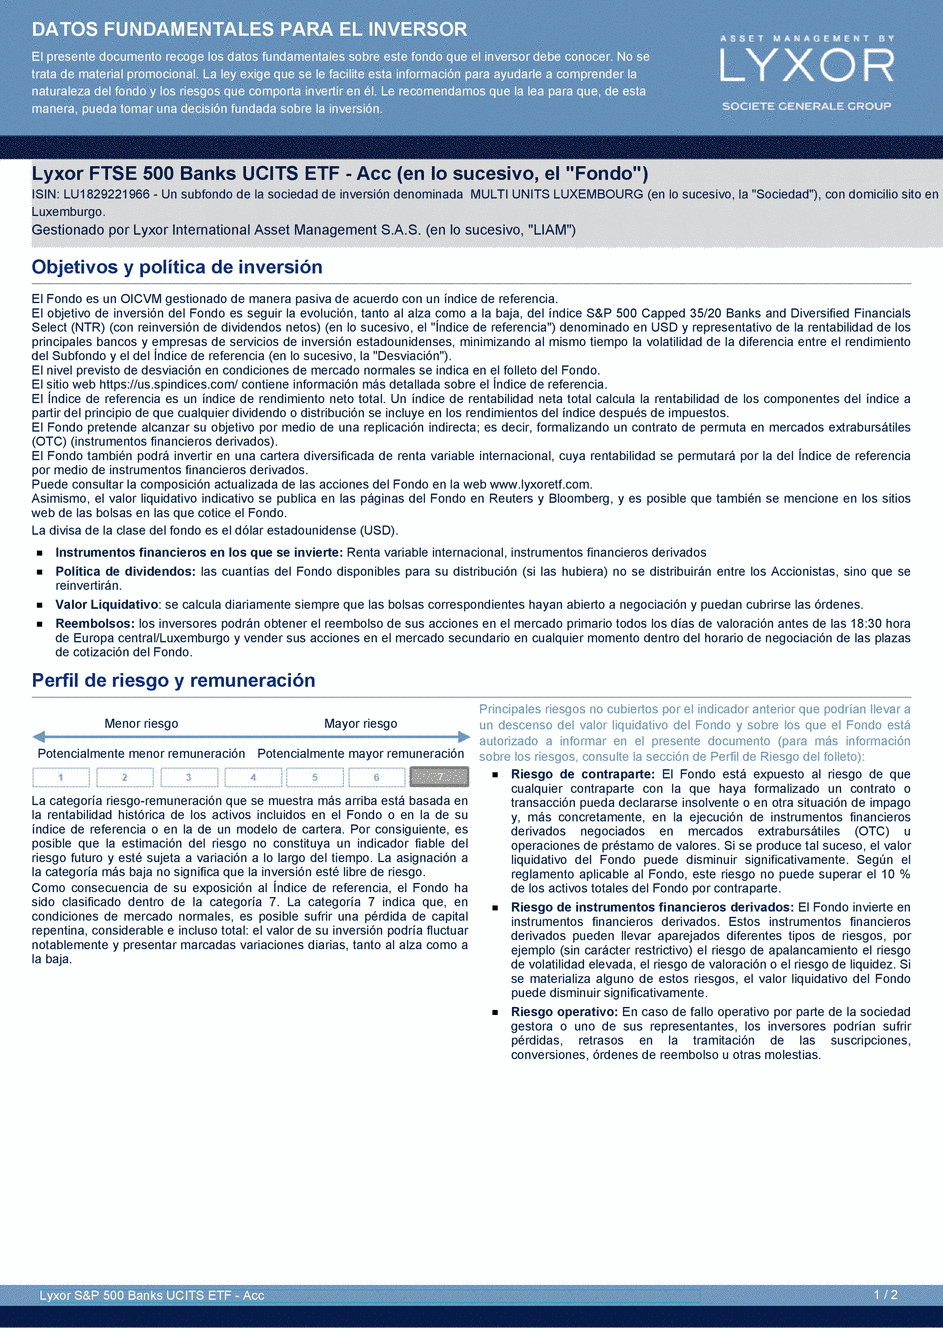 DICI Lyxor S&P 500 Banks UCITS ETF - Acc - 19/02/2021 - Espagnol